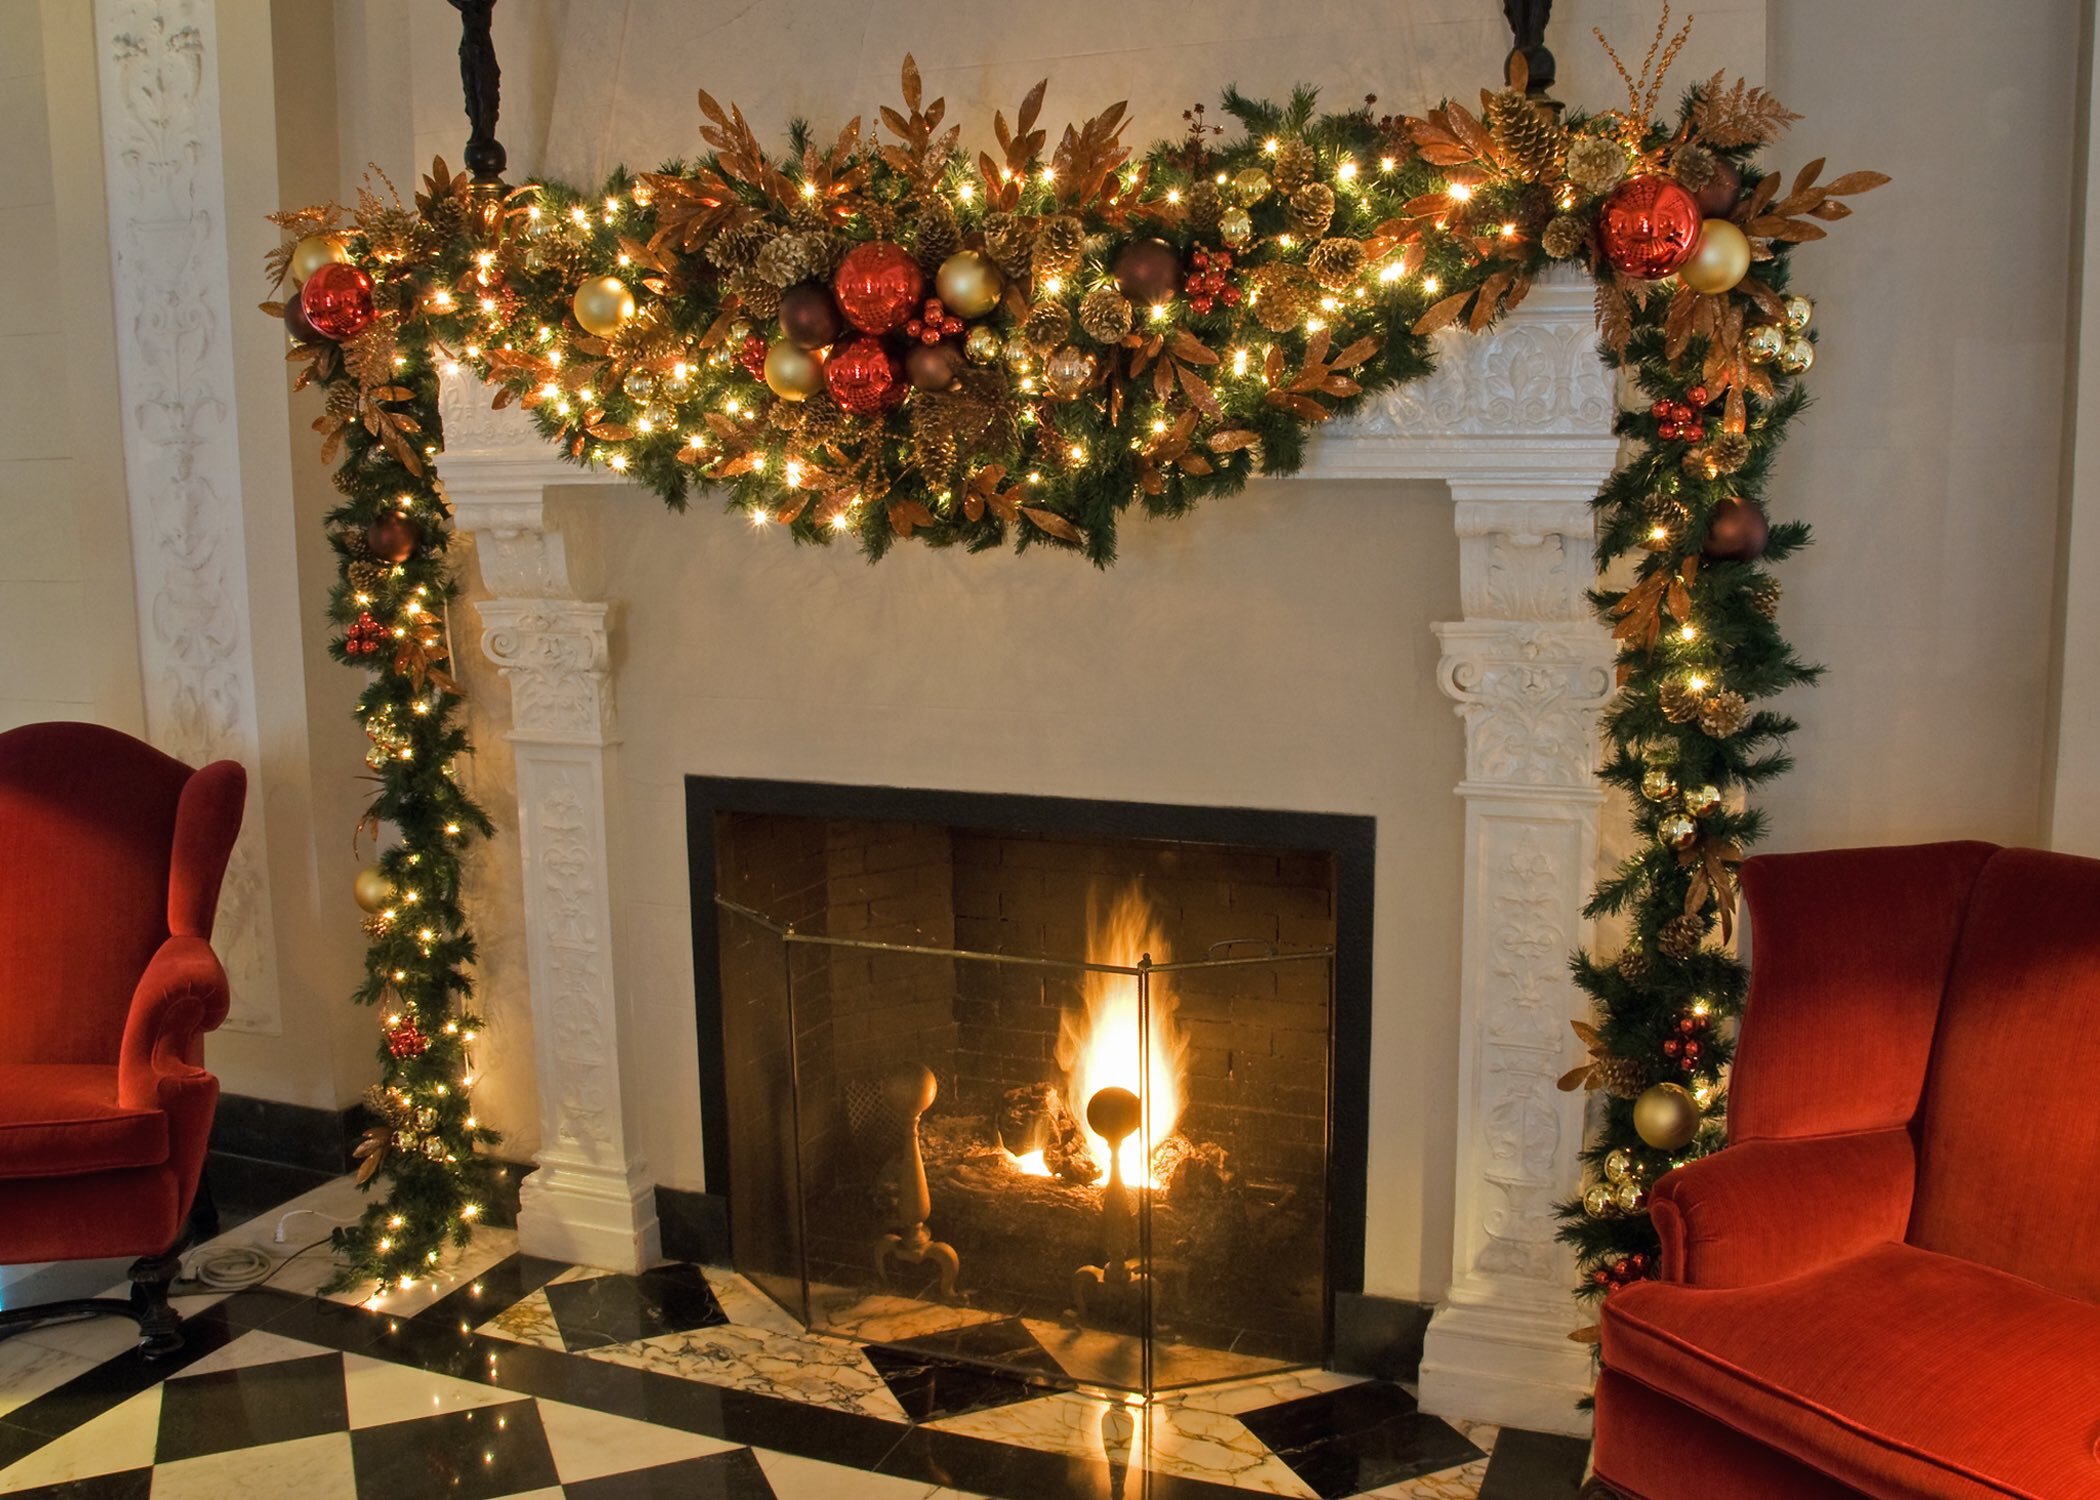 Vranicar 1-3-2015-Lobby, fireplace with fire, holidays.jpg